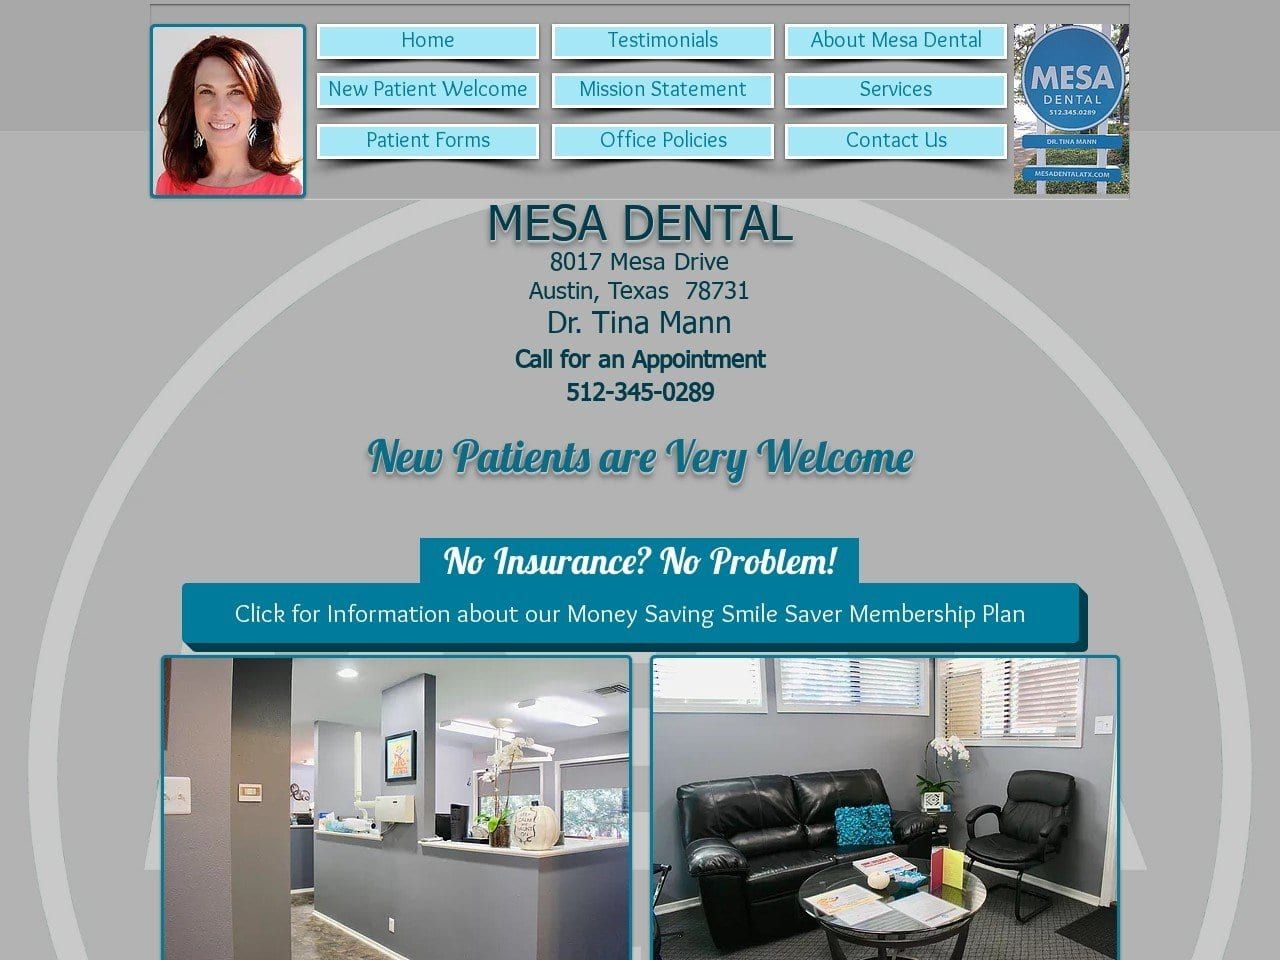 Mesa Dental Website Screenshot from mesadentalatx.com